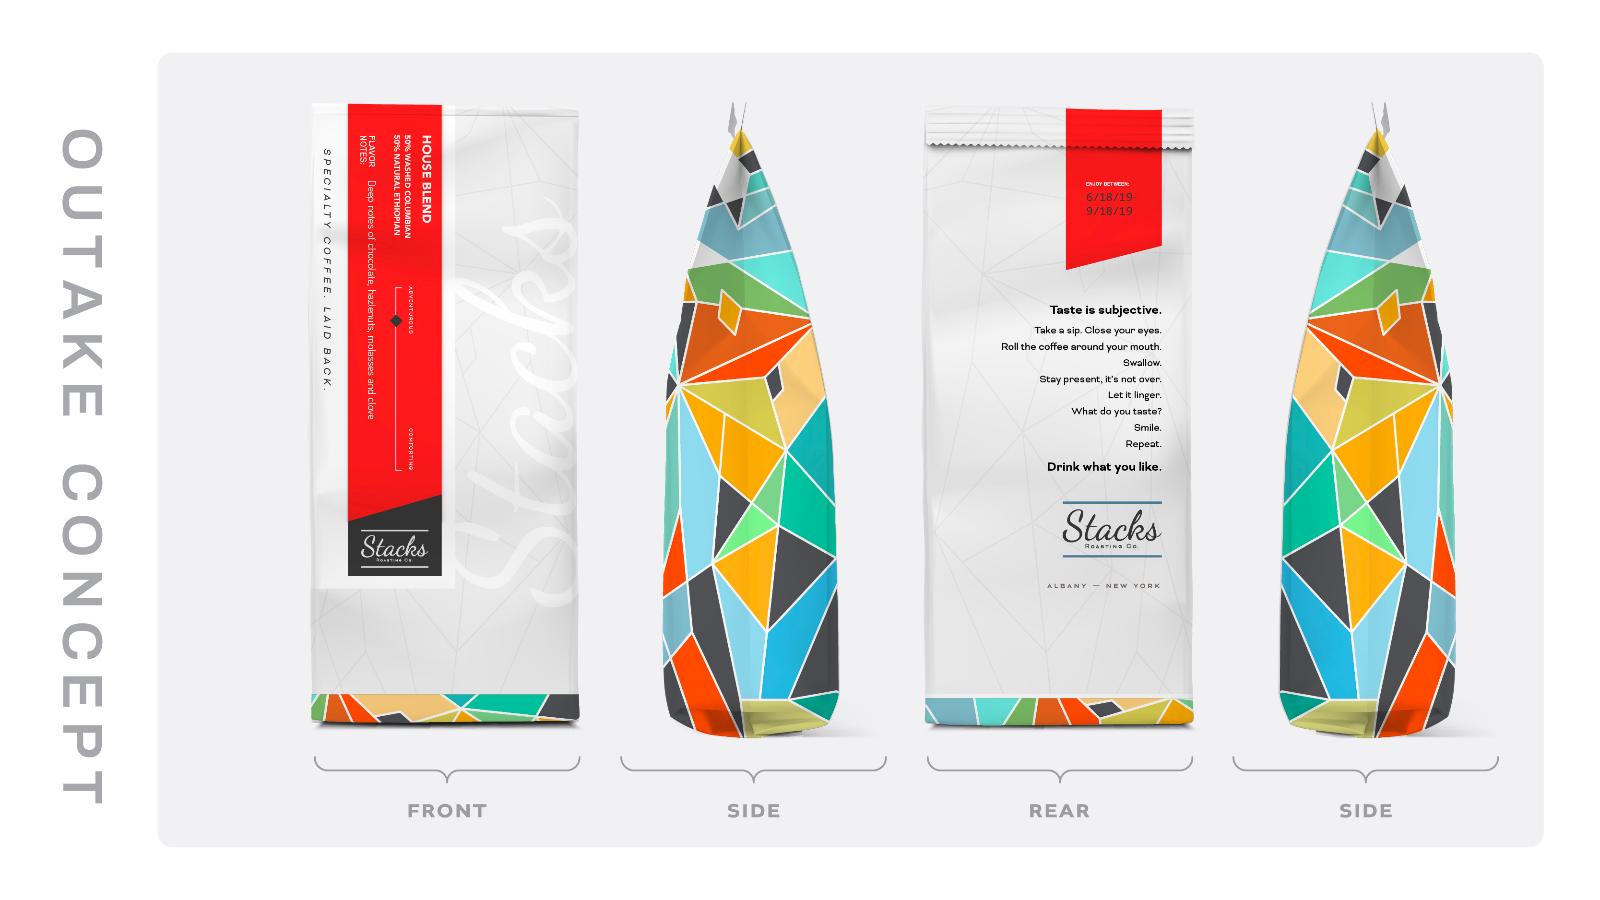 Stacks Coffee Roasters | Coffee Bag Design Outake Concept 1